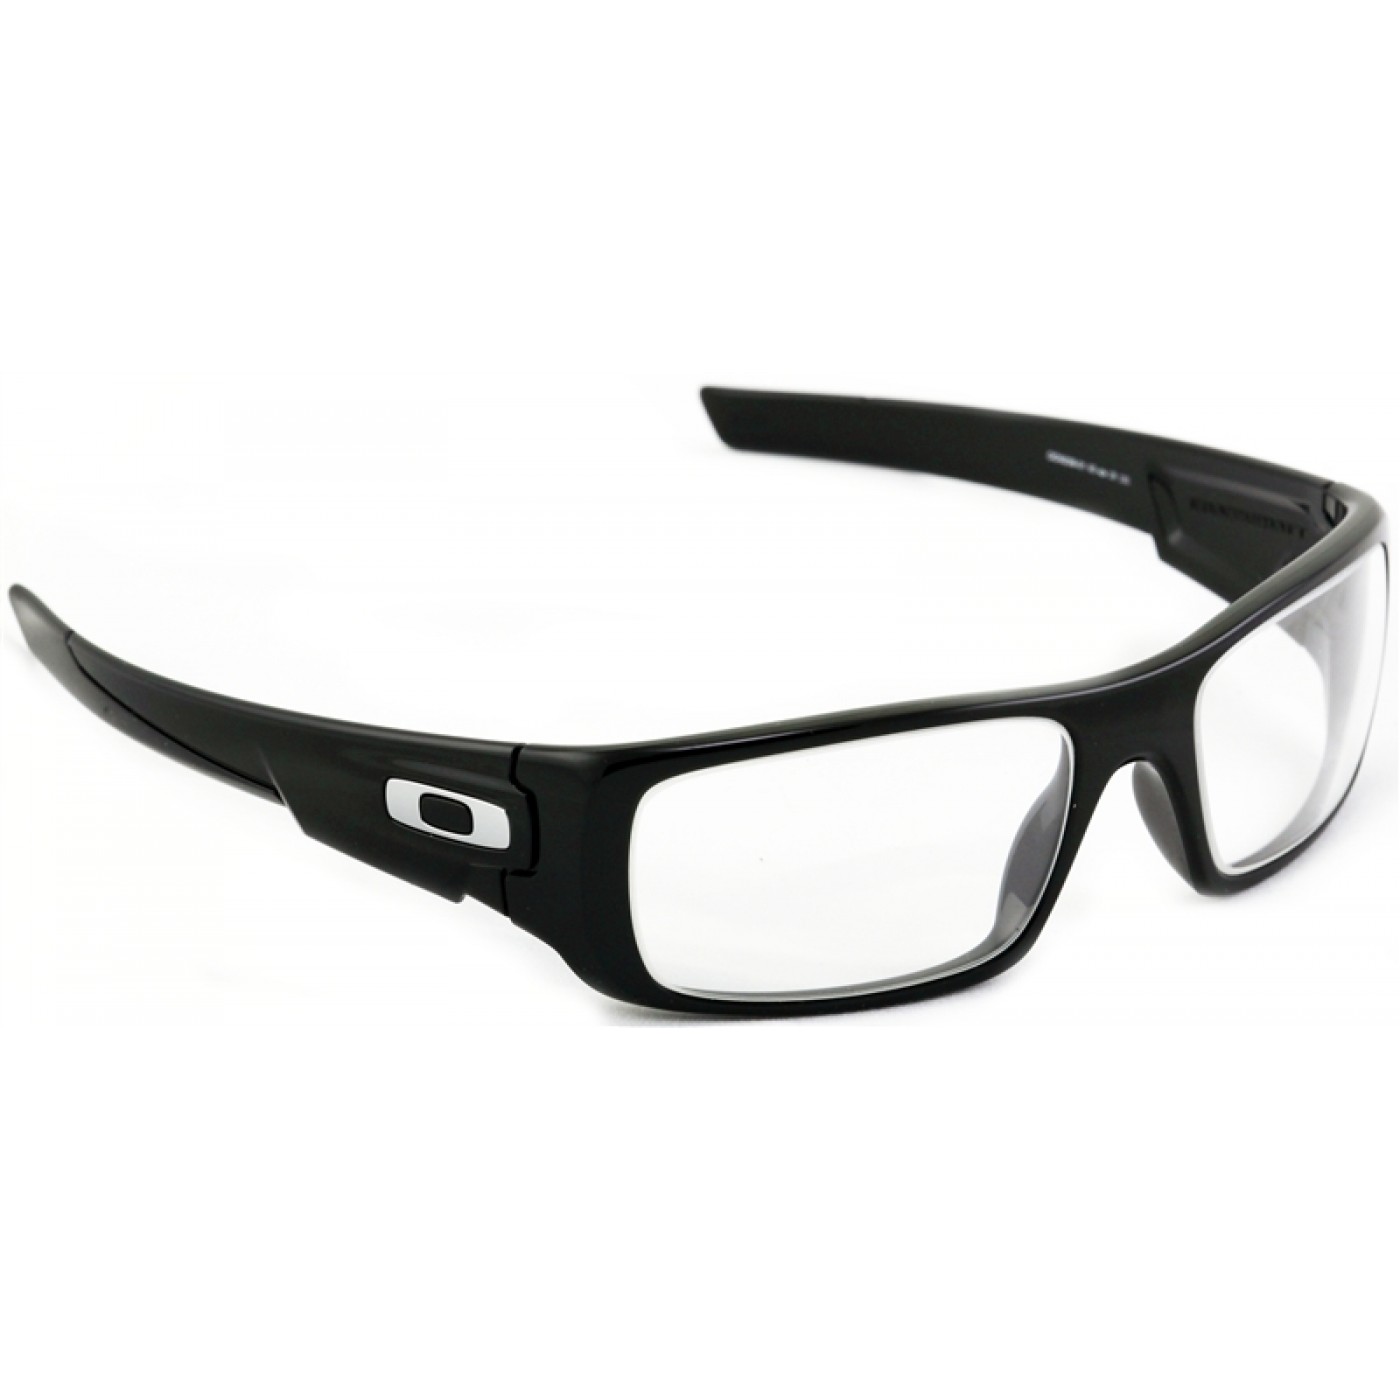 Oakley Crankshaft Lead Glasses | Radiation Safety Glasses